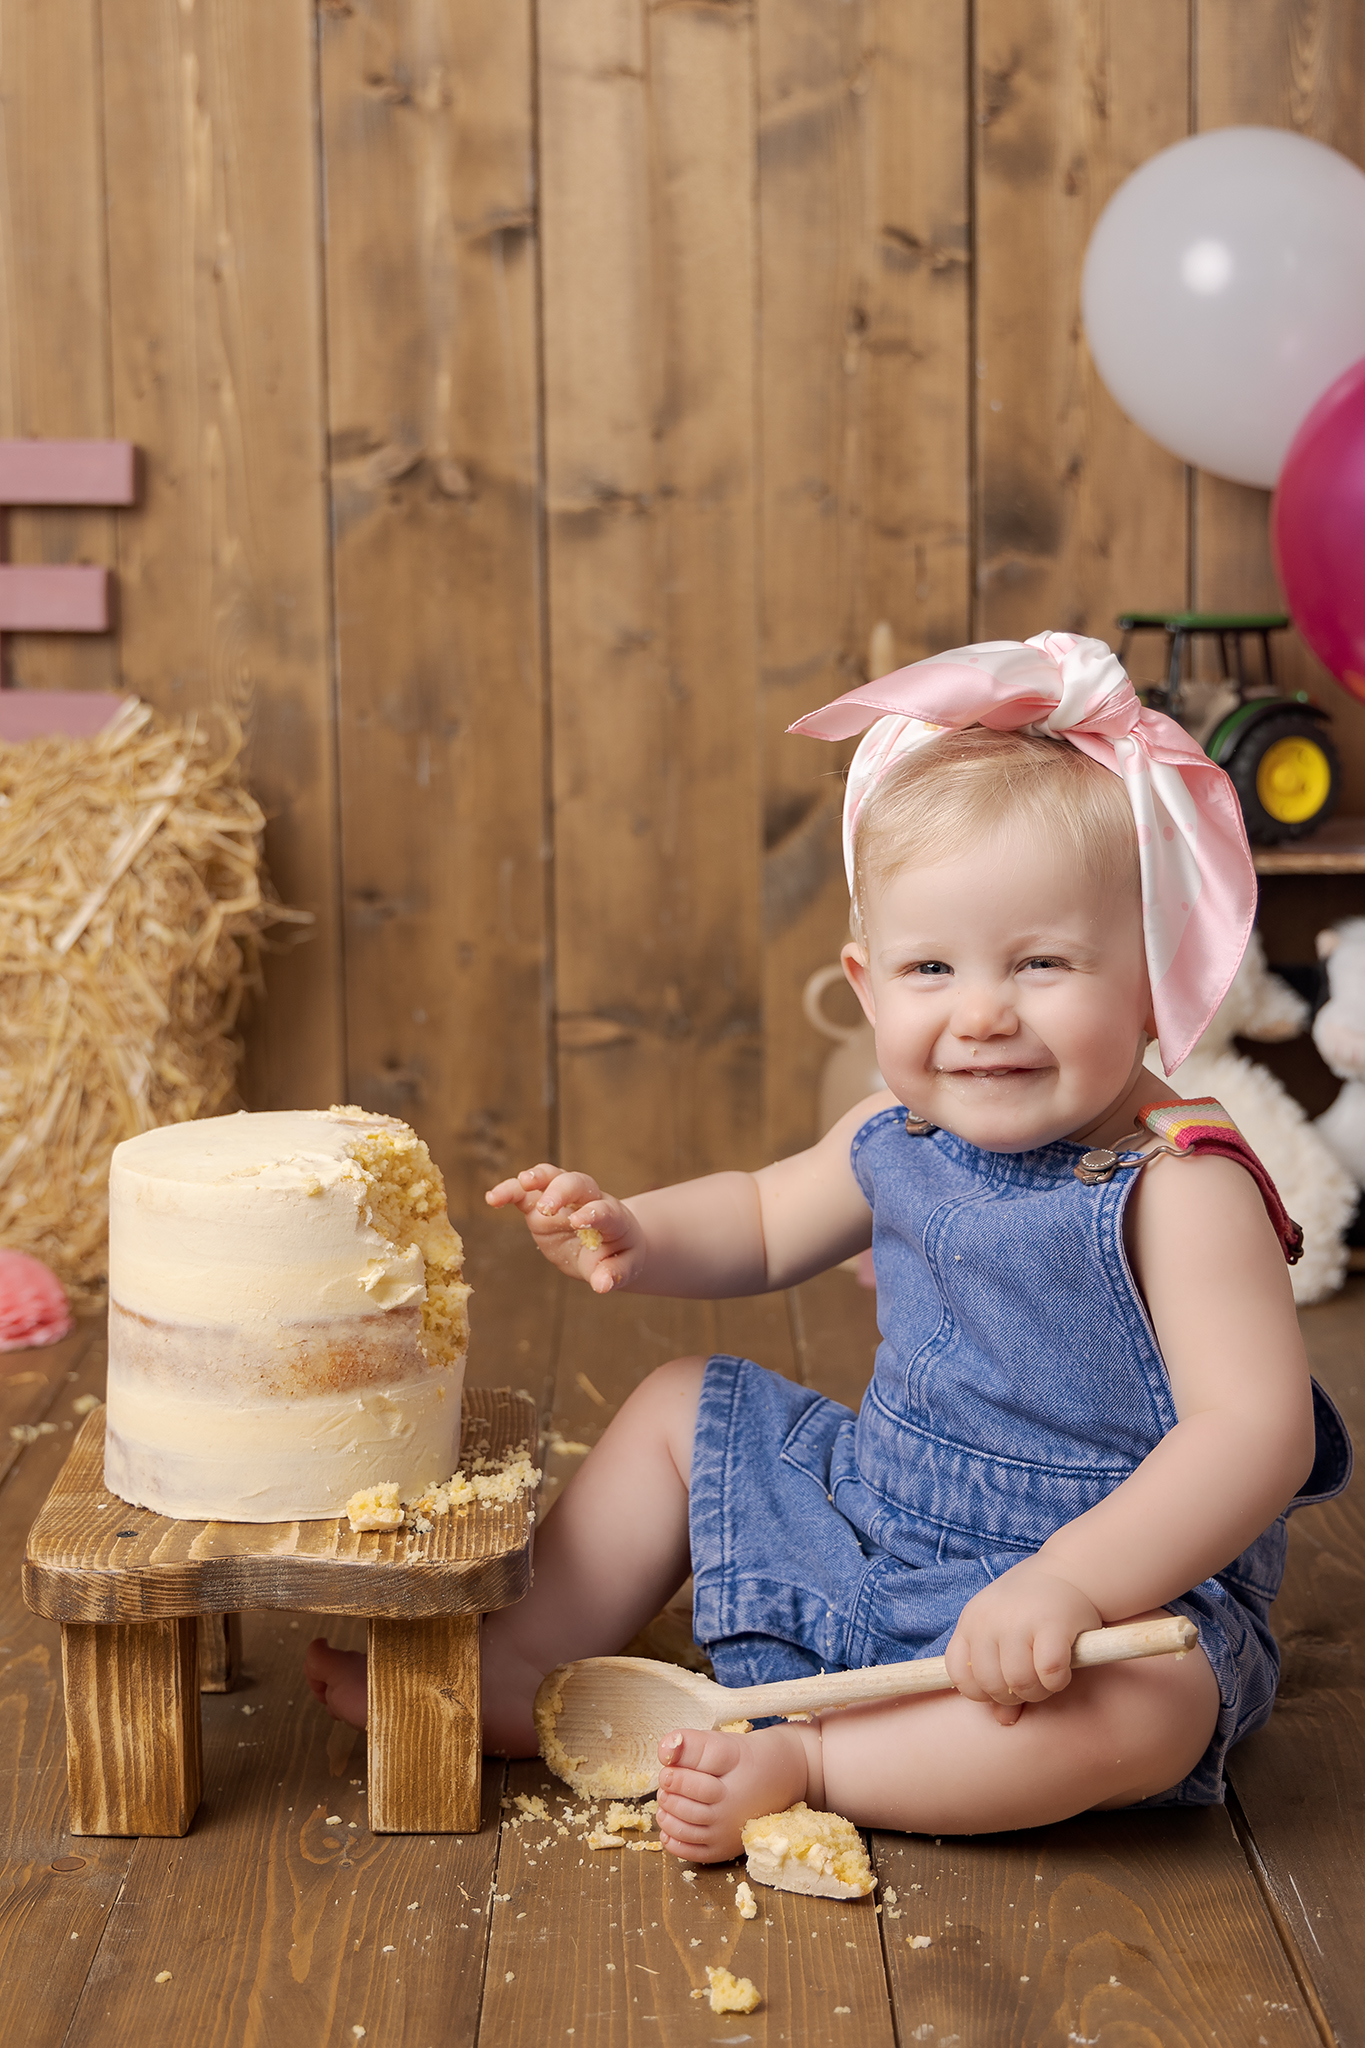 Farmyard theme girl's cake smash, little girl giggling and having fun during her cake smash in Sutton Coldfield birmingham